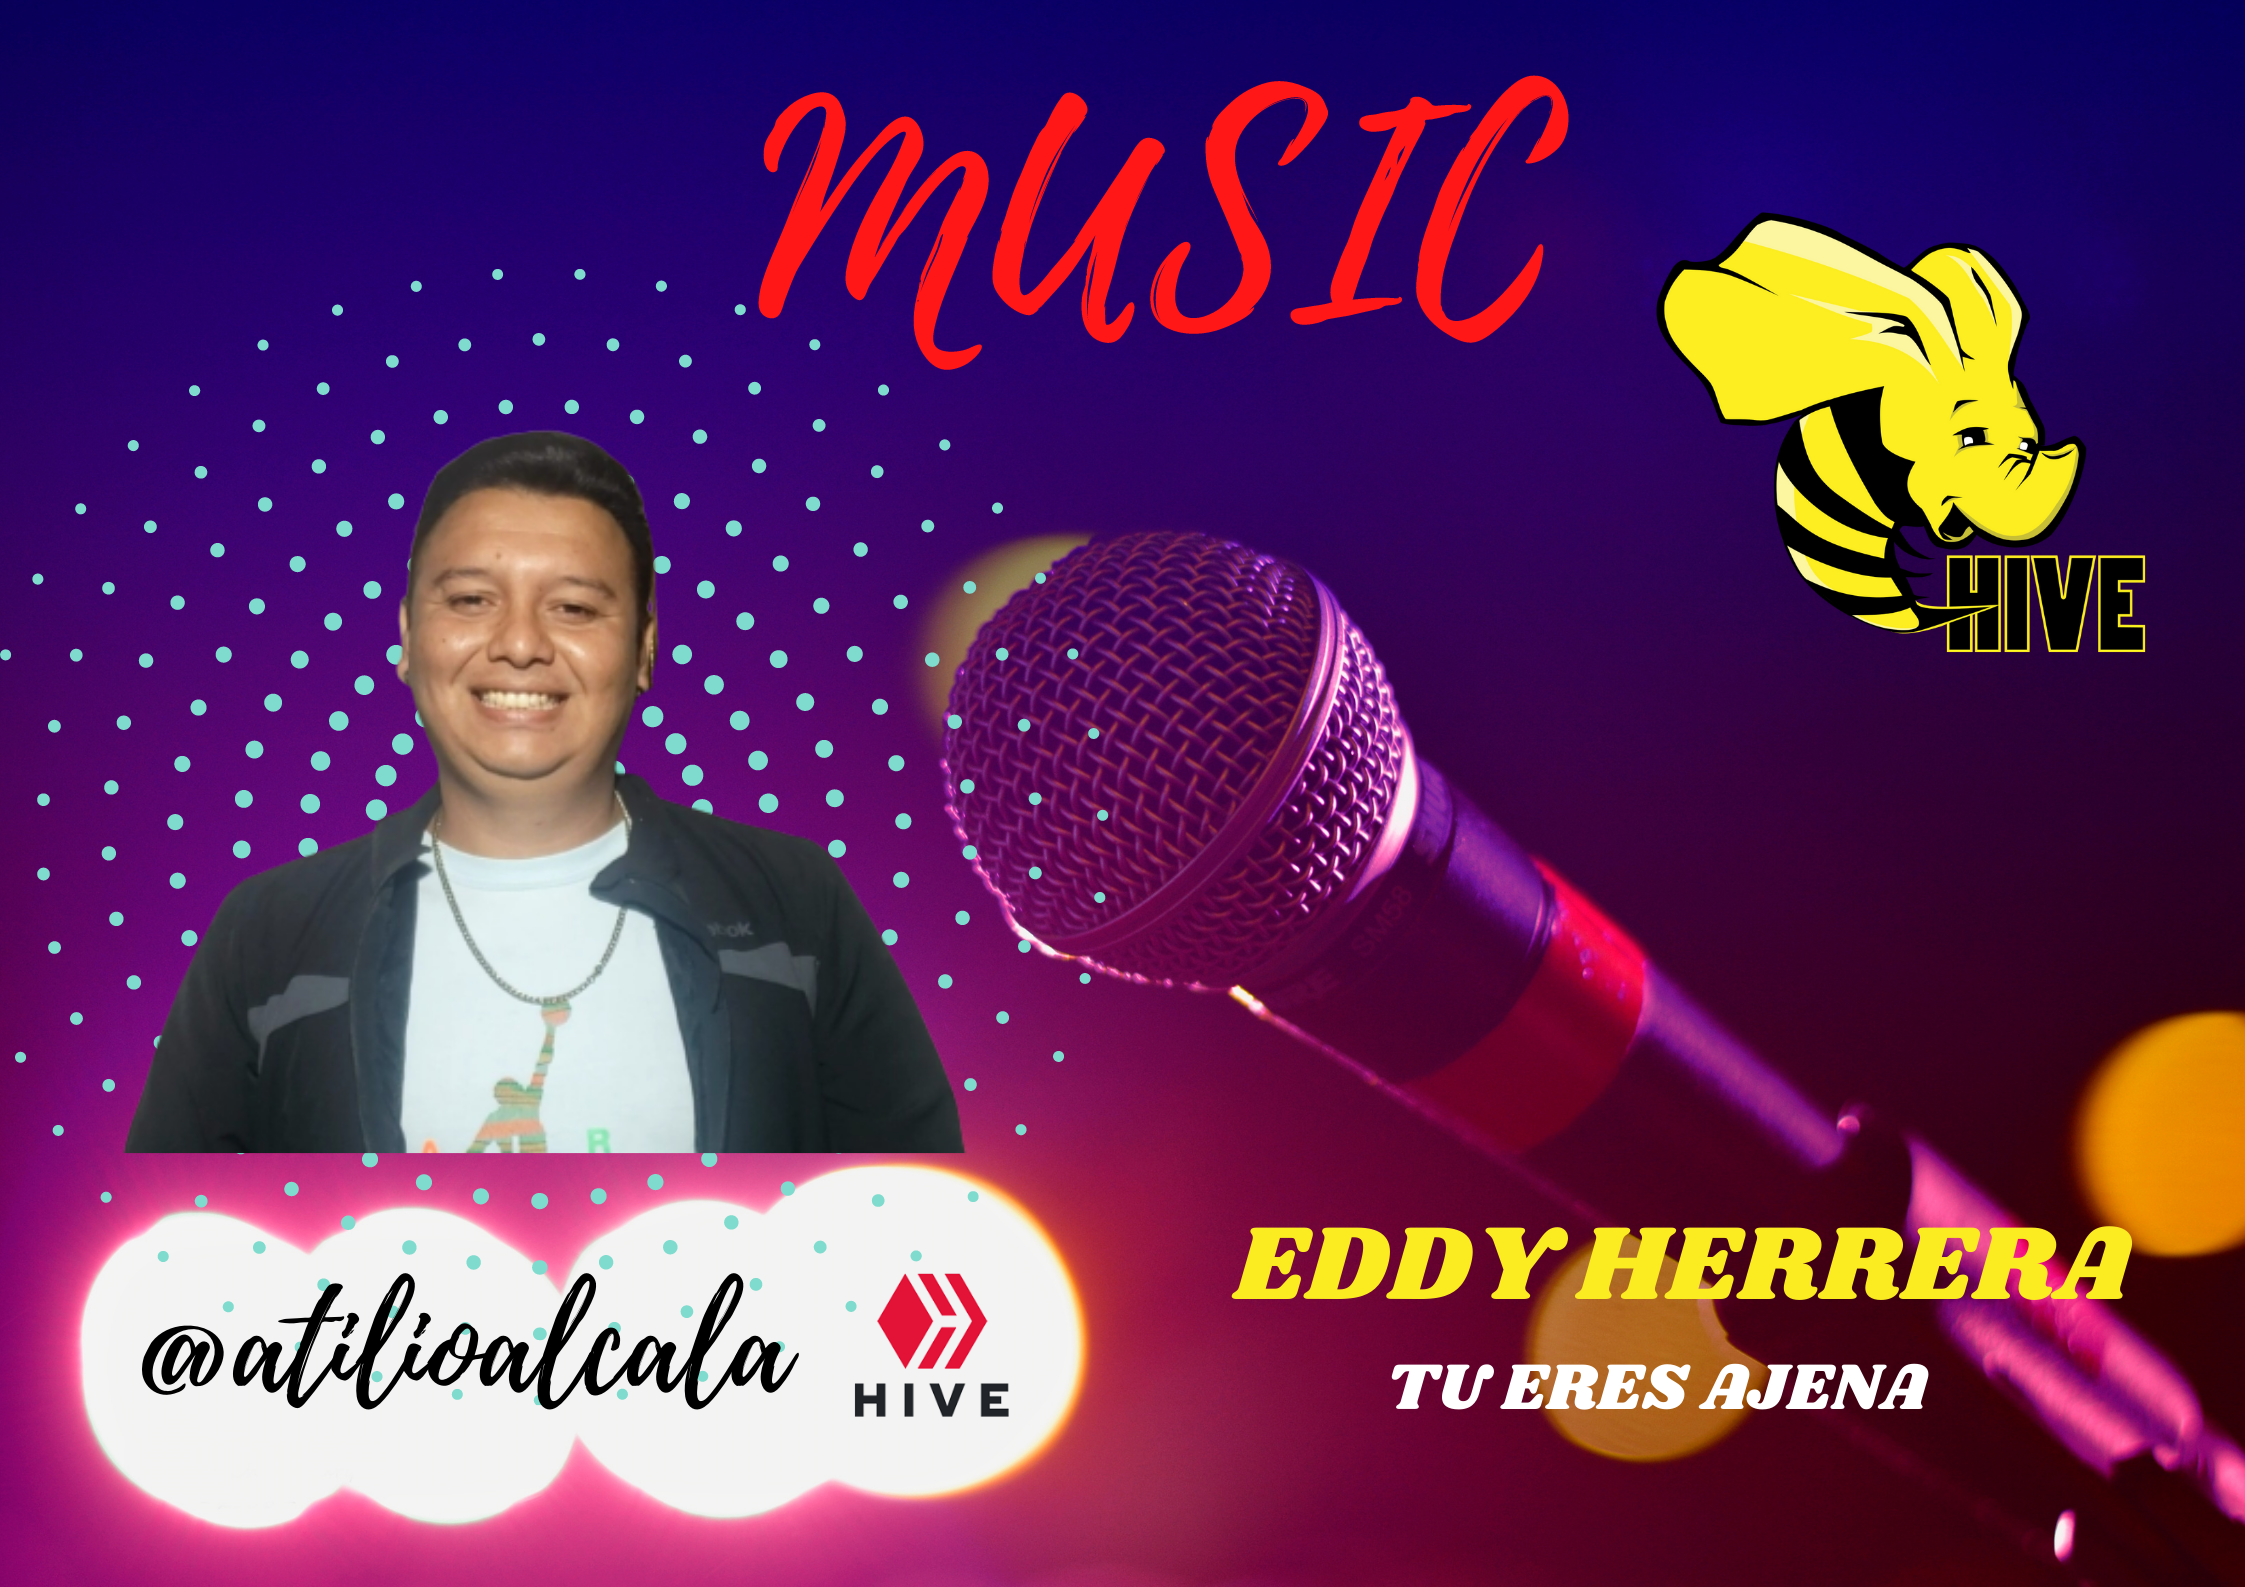 EDDY HERRERA.png